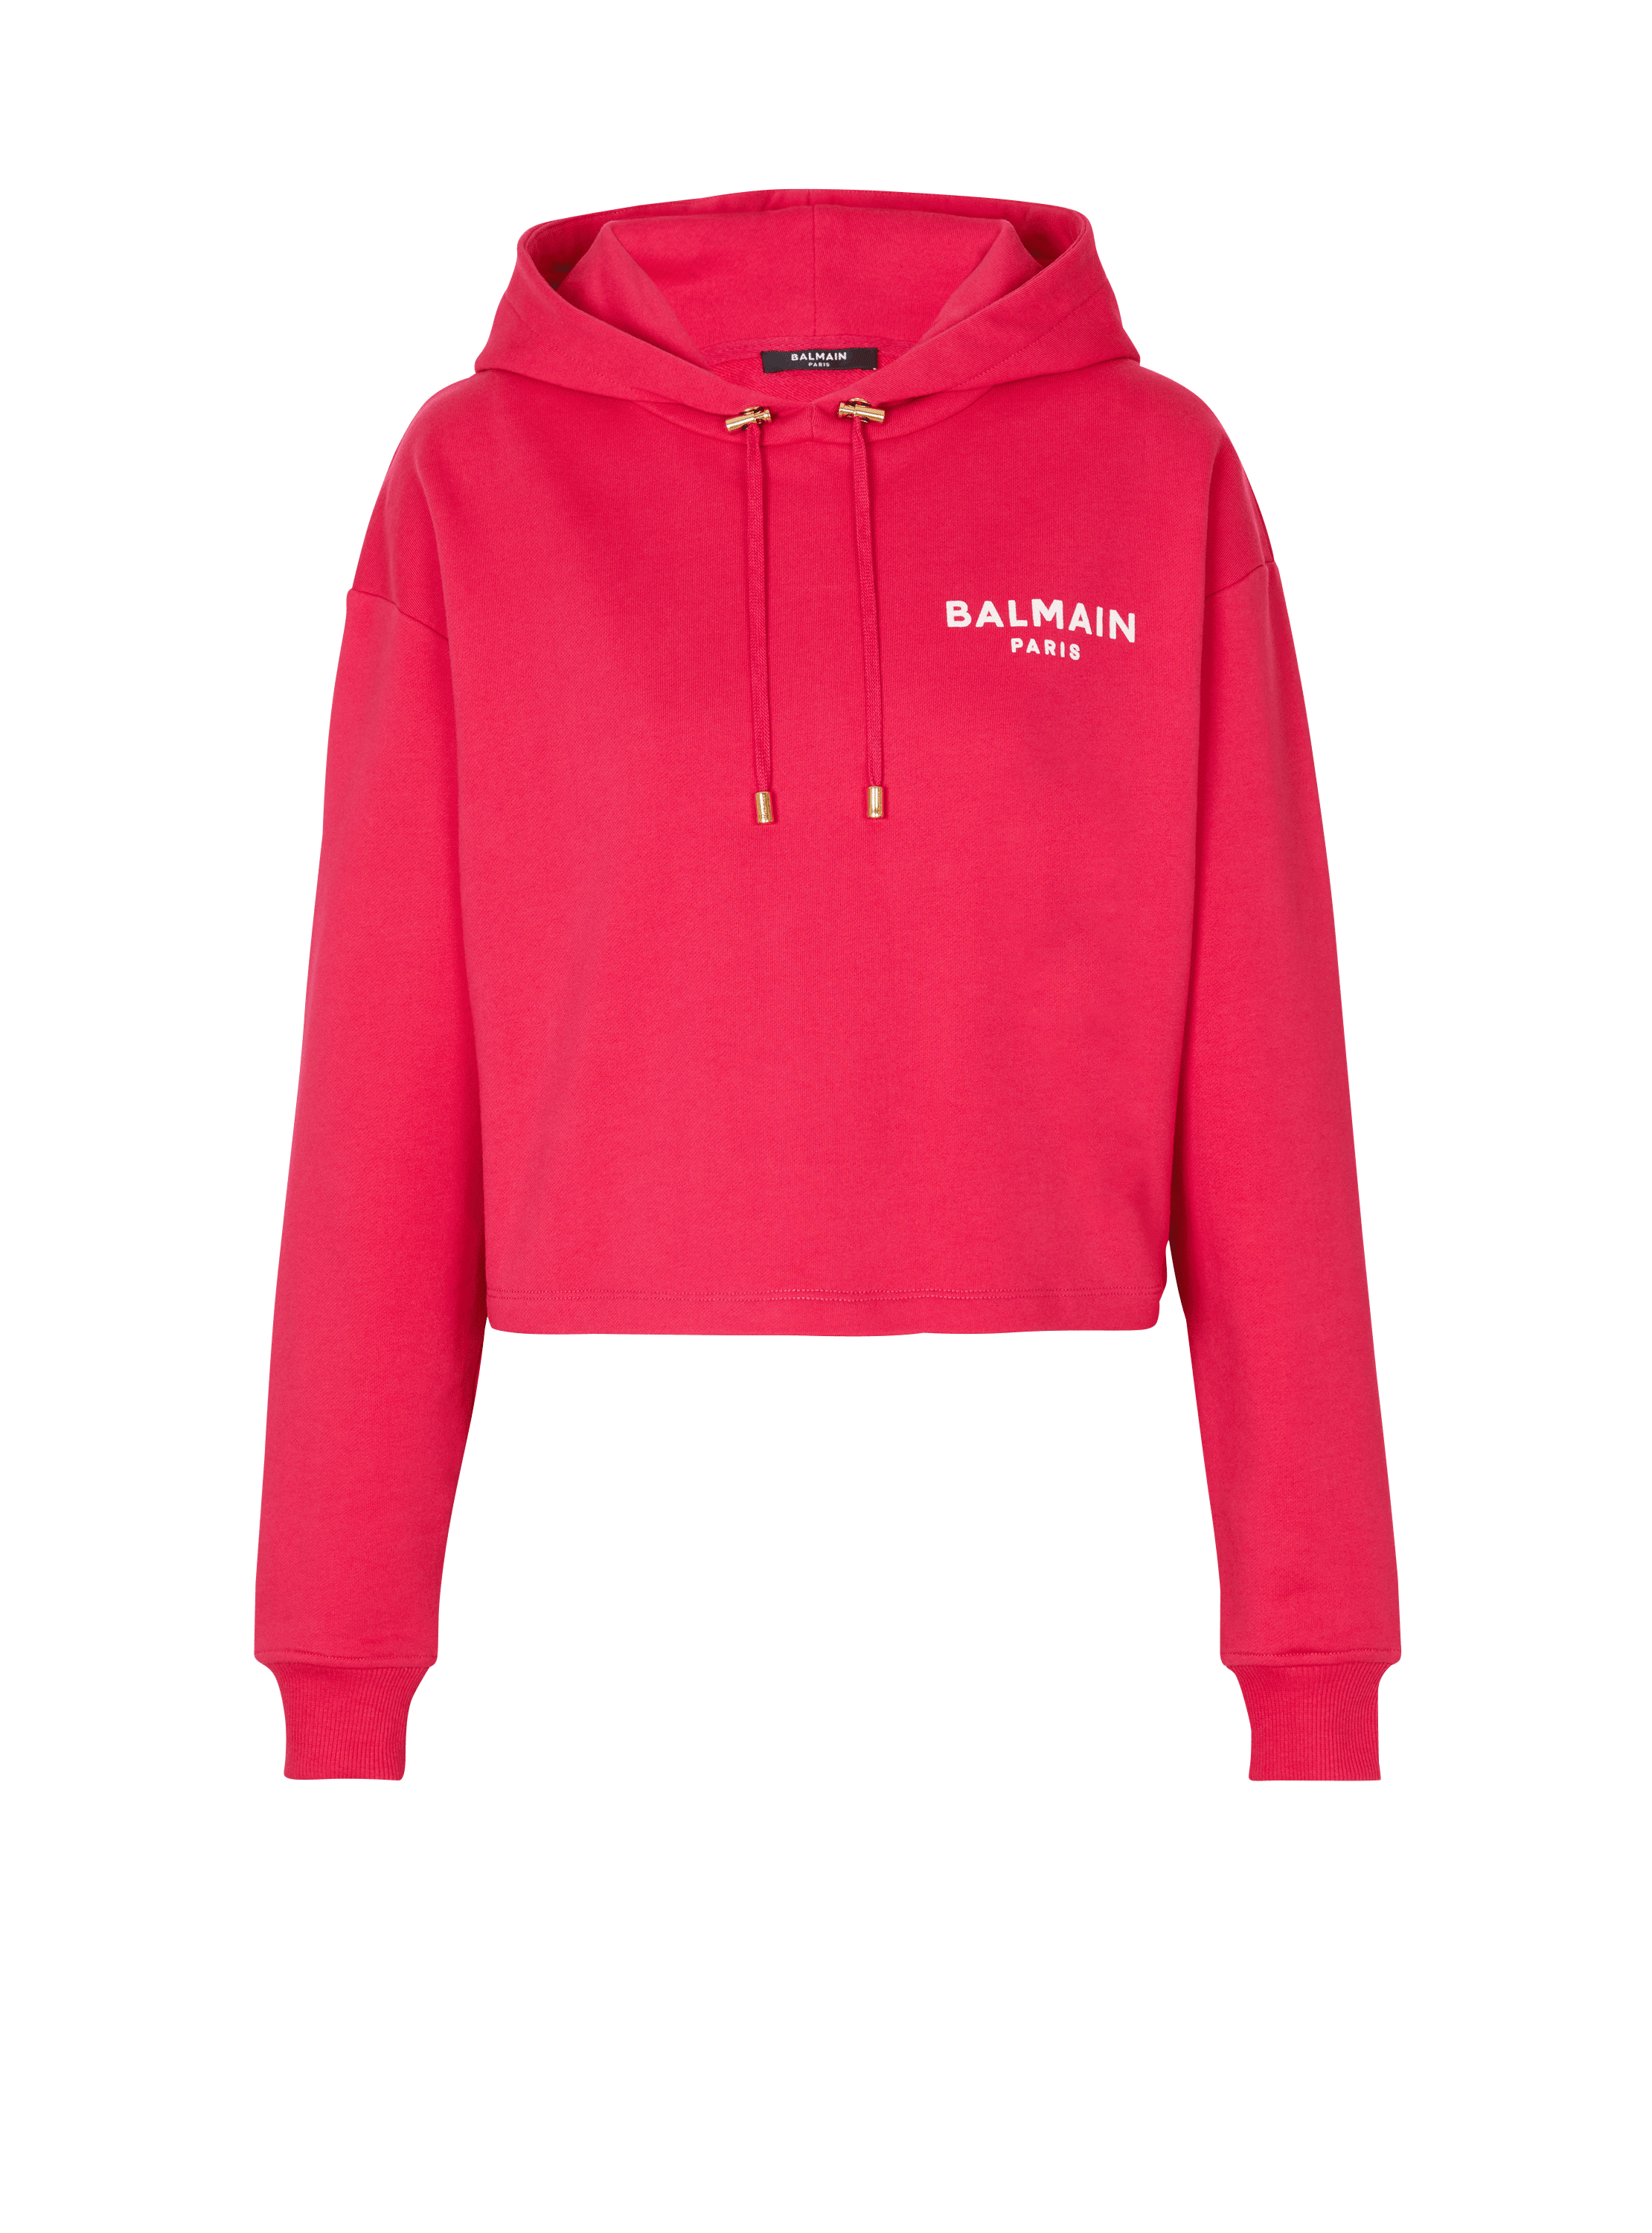 Flocked Balmain Paris hoodie, pink, hi-res